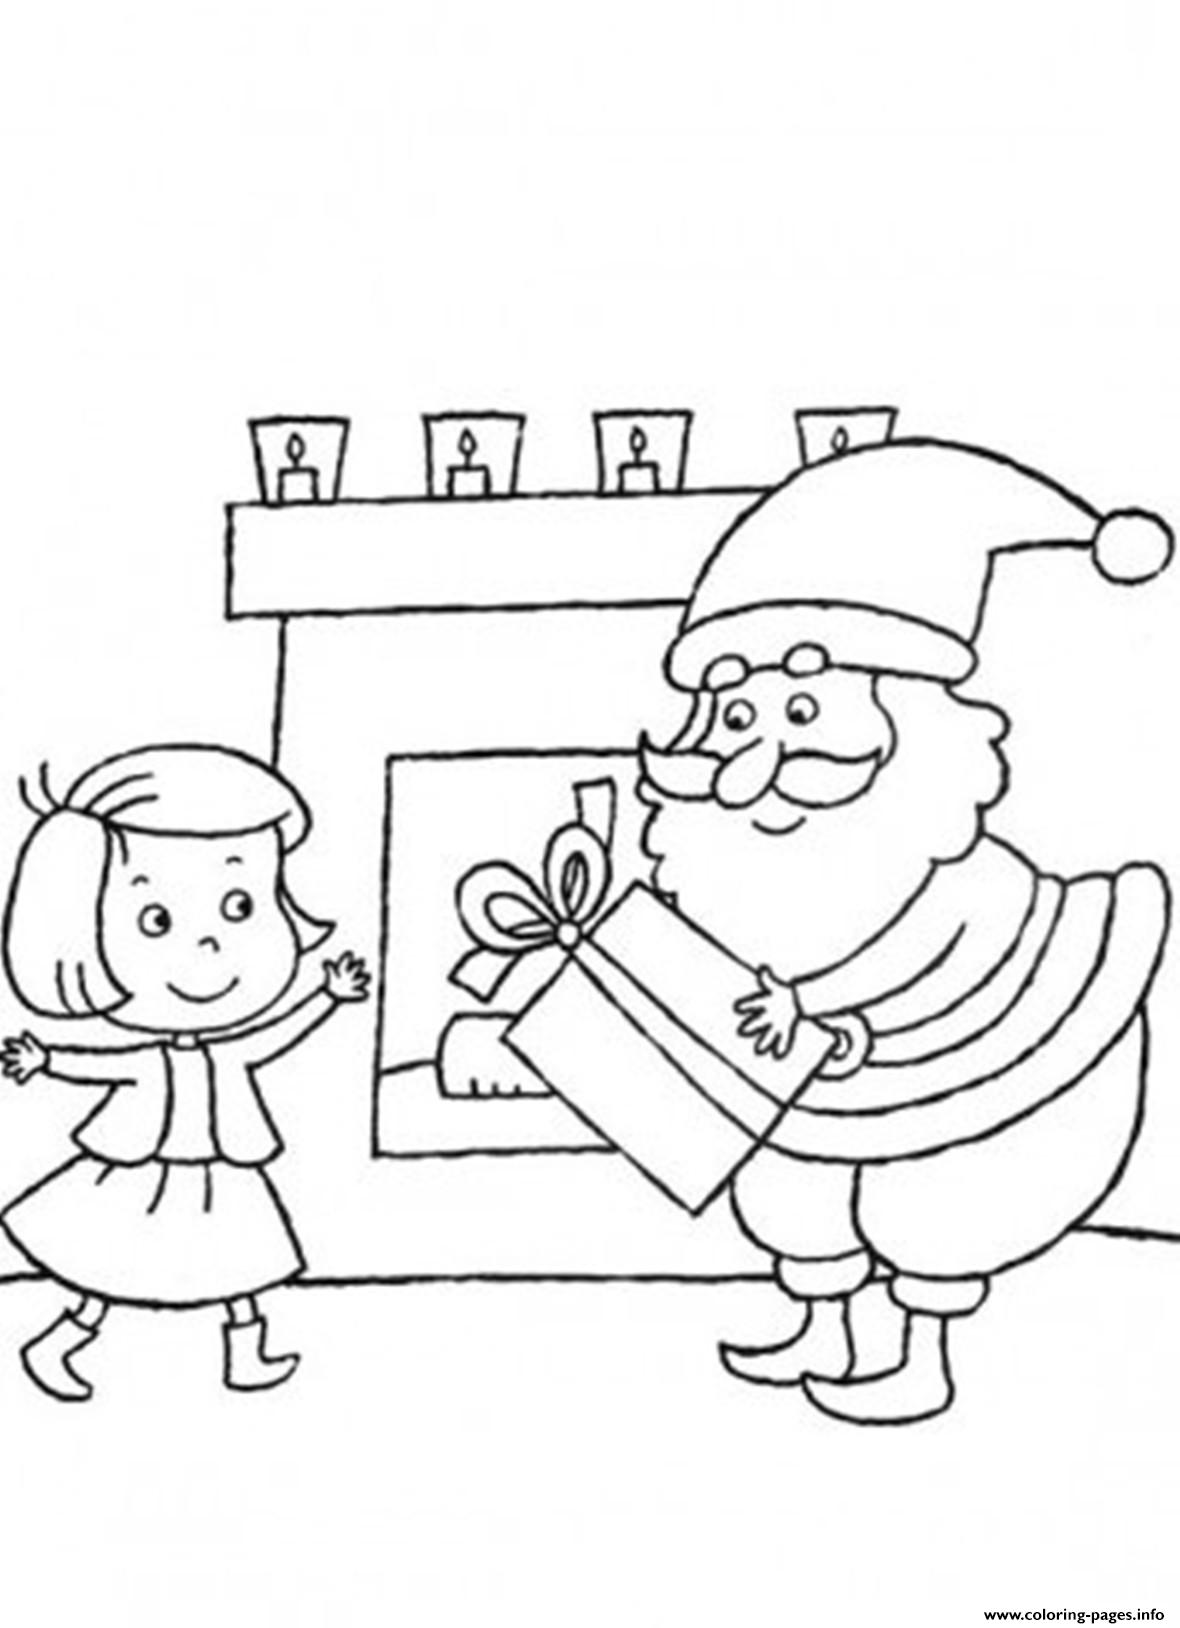 Christmas S Santa Delivering Gift For Little Girl84e1 coloring